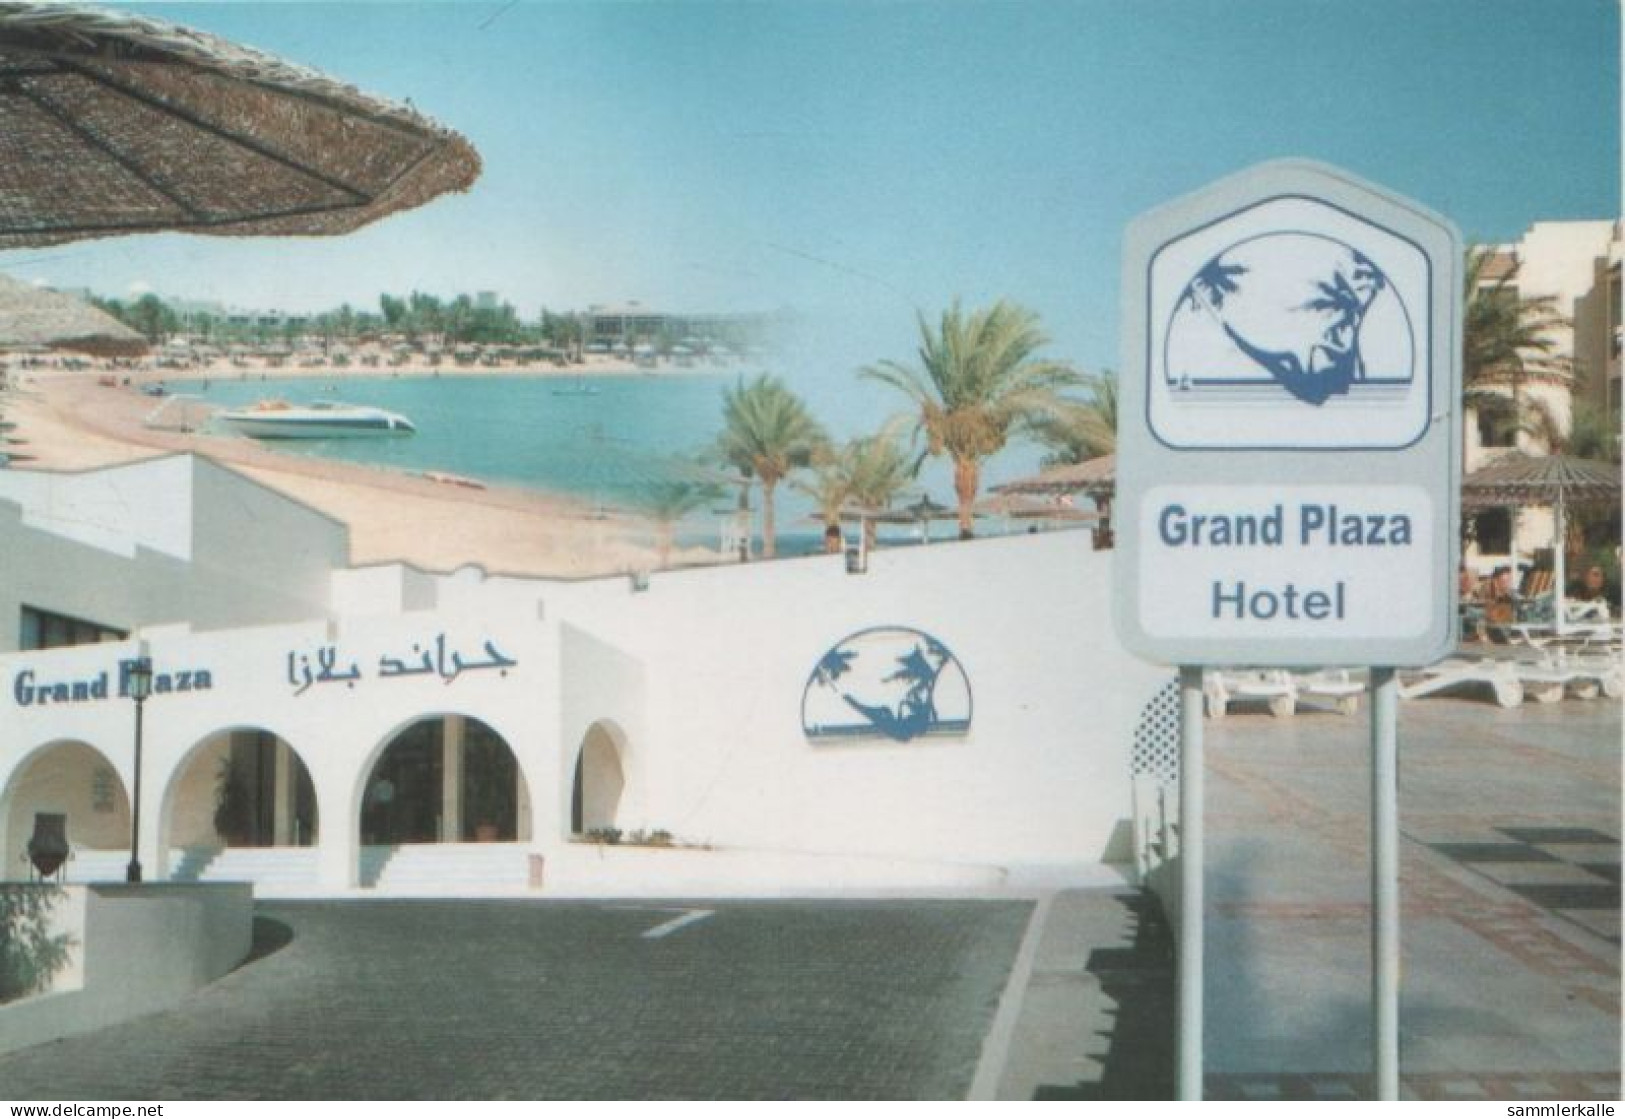 9001247 - Hurghada - Ägypten - Grand Plaza Hotel - Hurgada